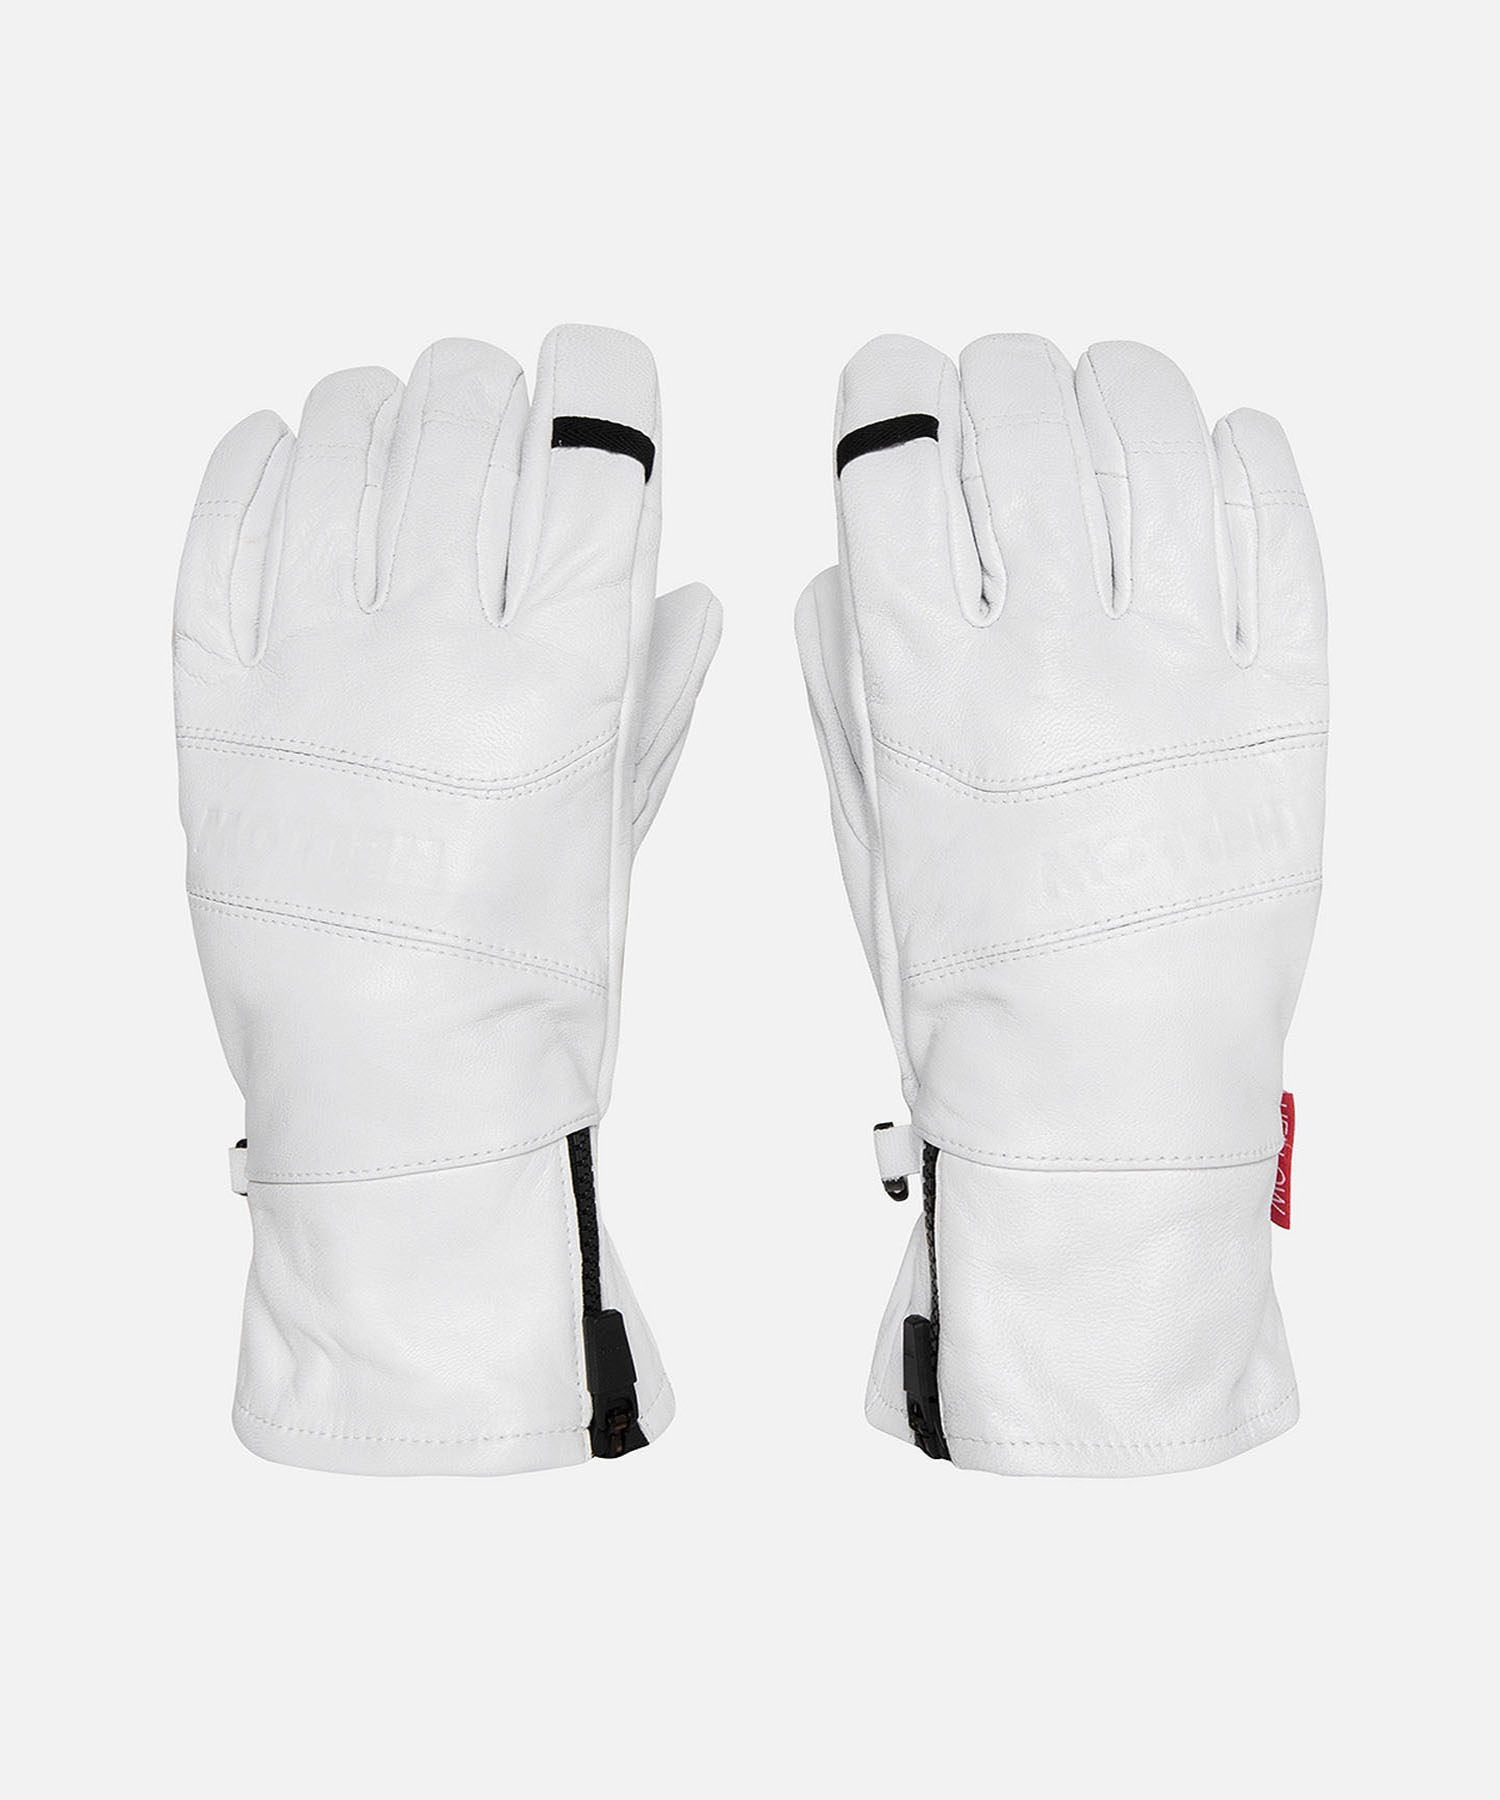 GU Mirae 23 Gloves WHITE